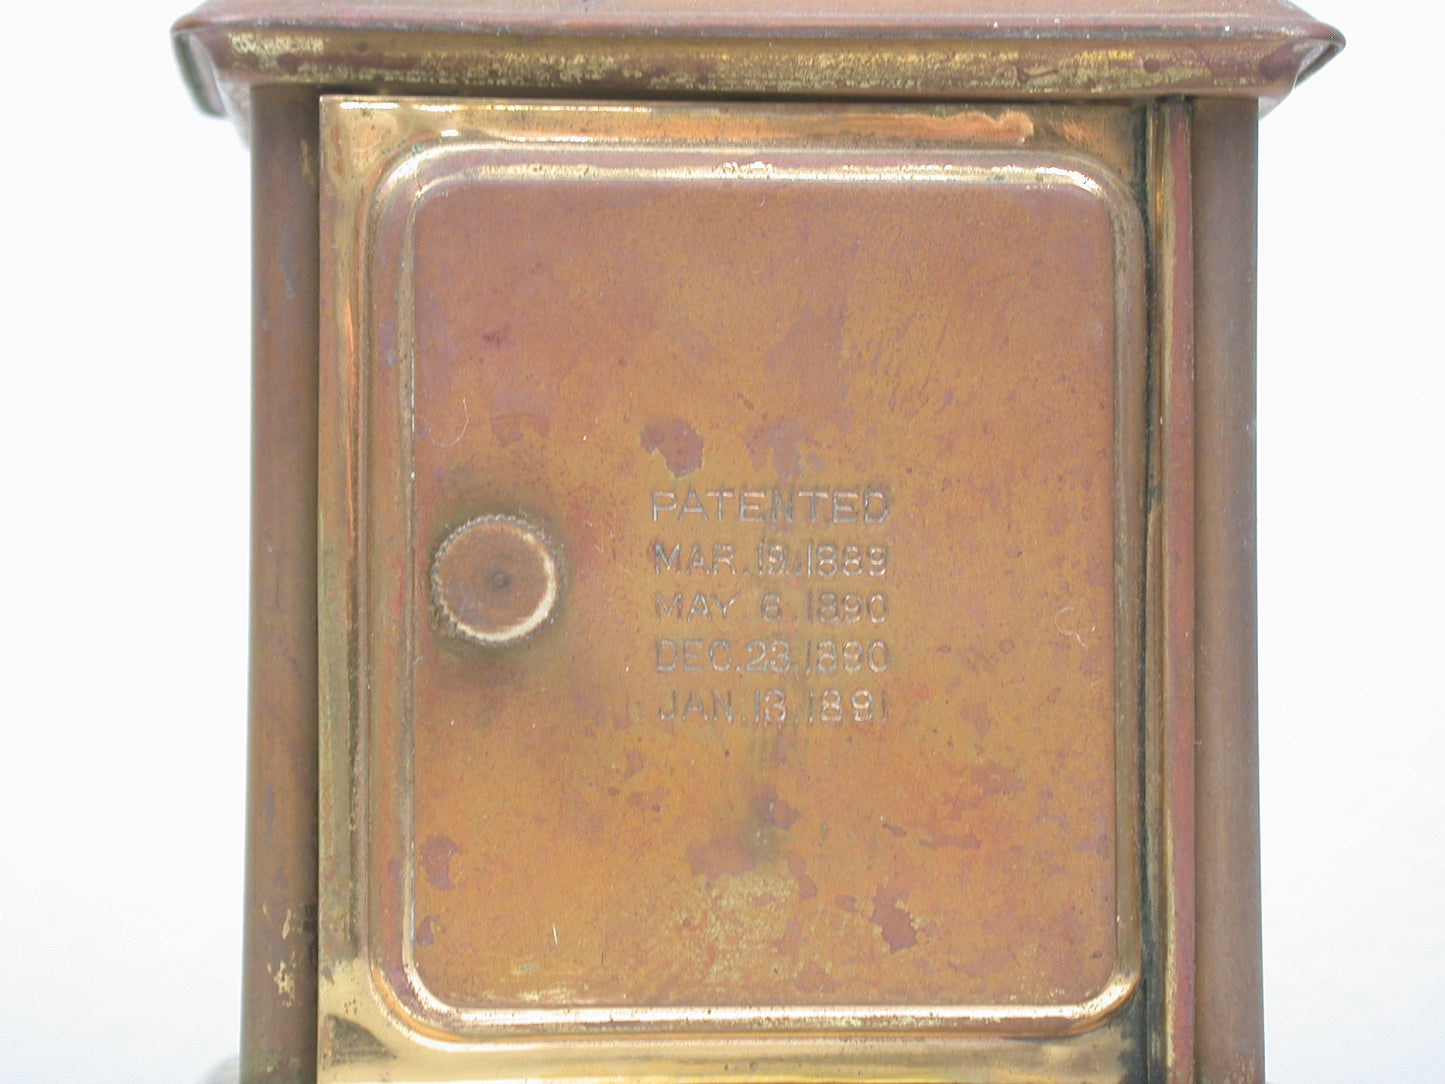 Lot 9- Waterbury 30-Hour Time & Strike, Brass & Glass Carriage Clock